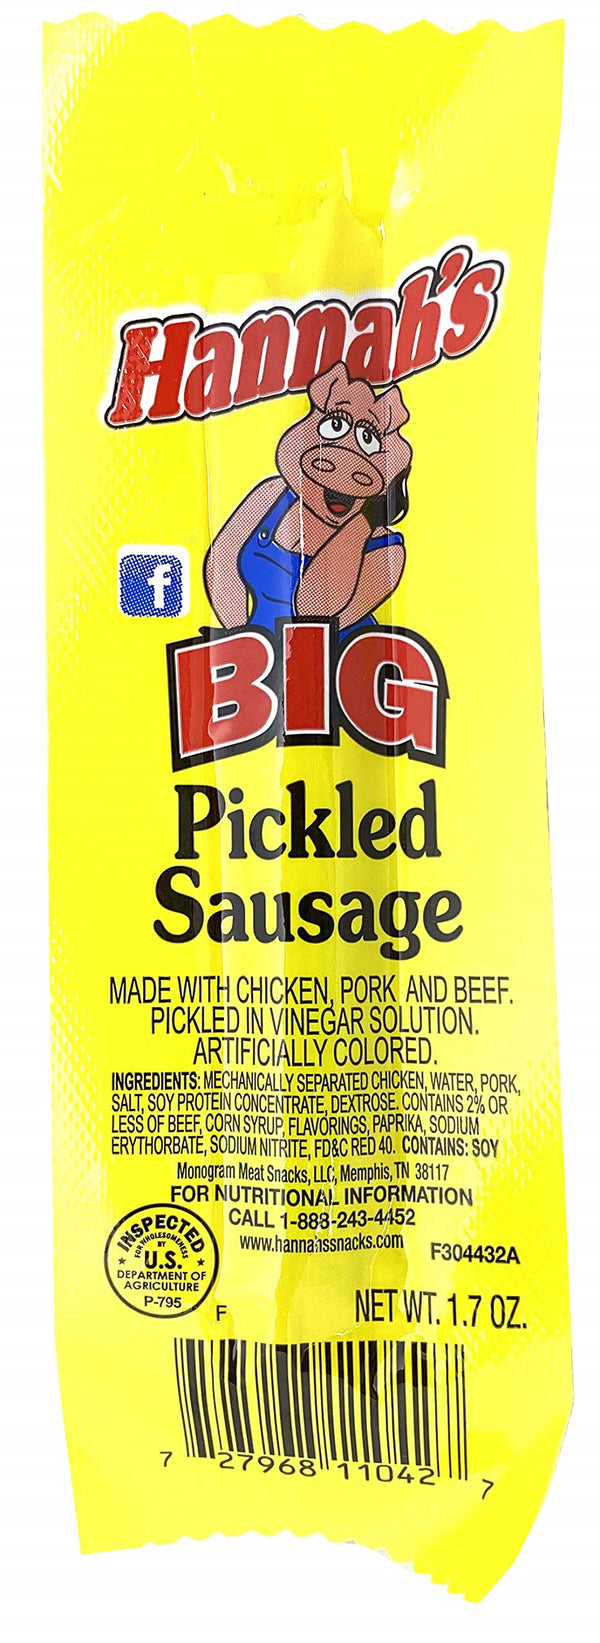 Hannah's Big Pickled Sausage